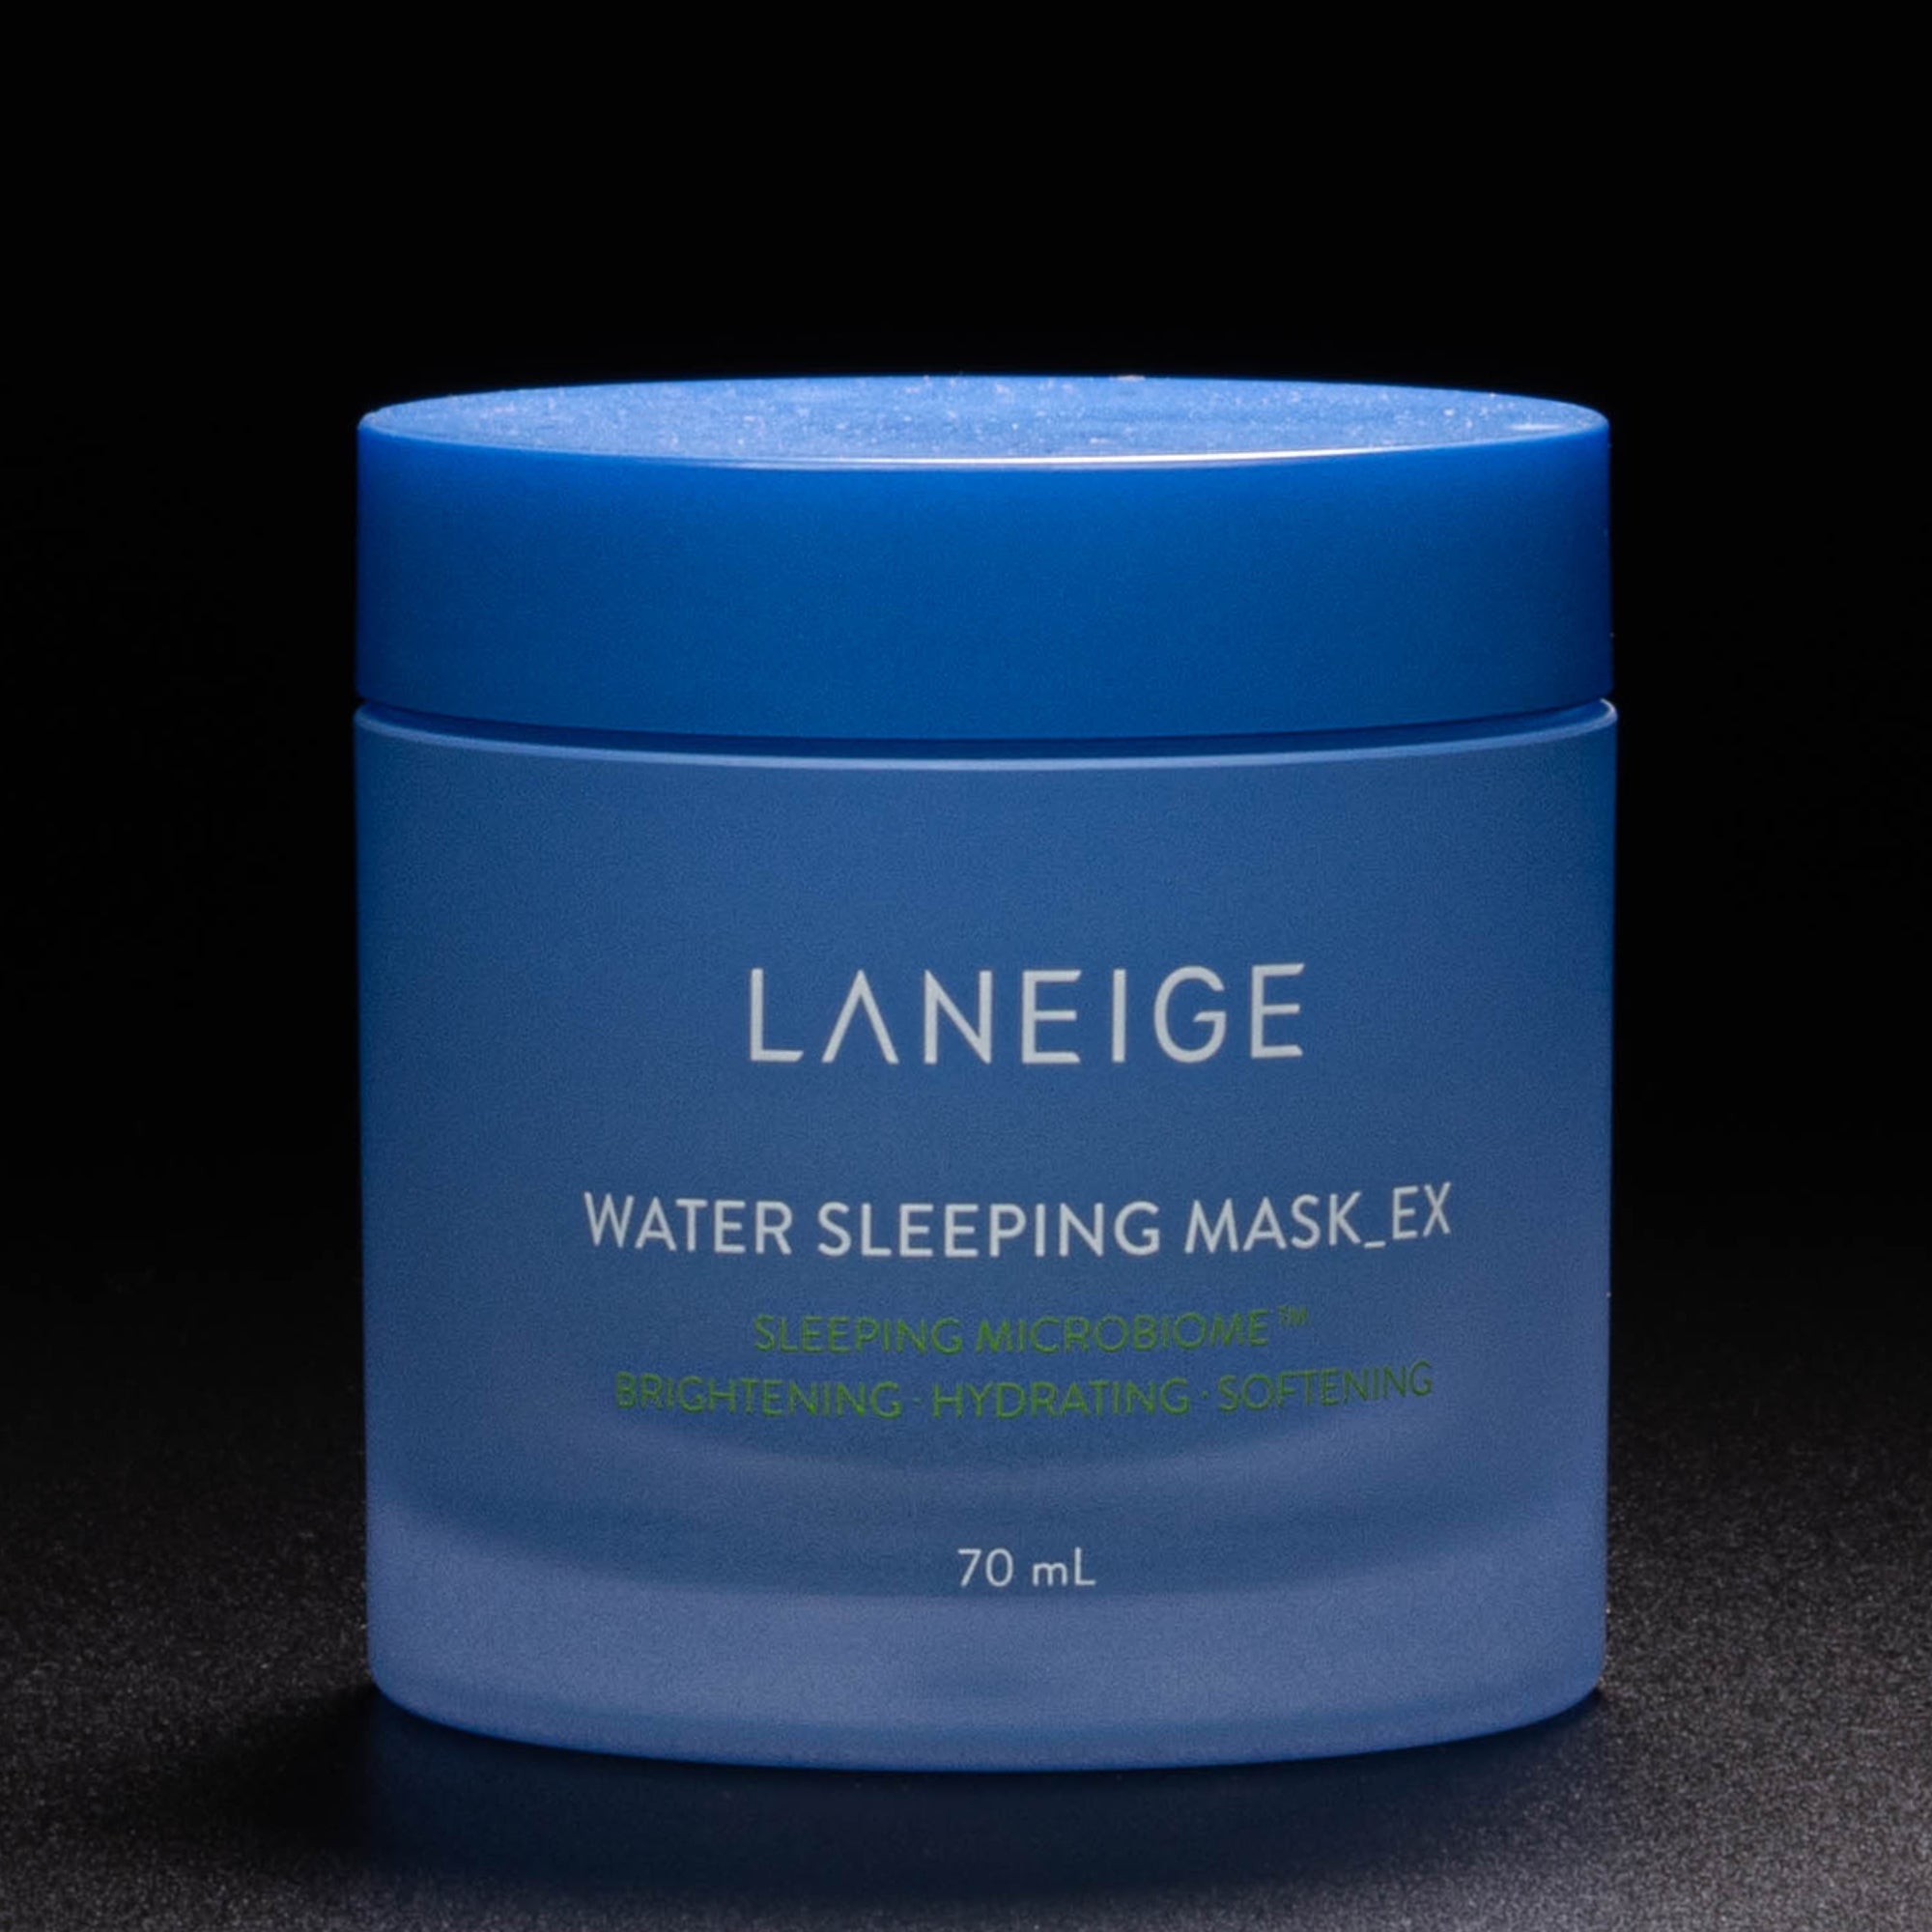 Water Sleeping Mask EX